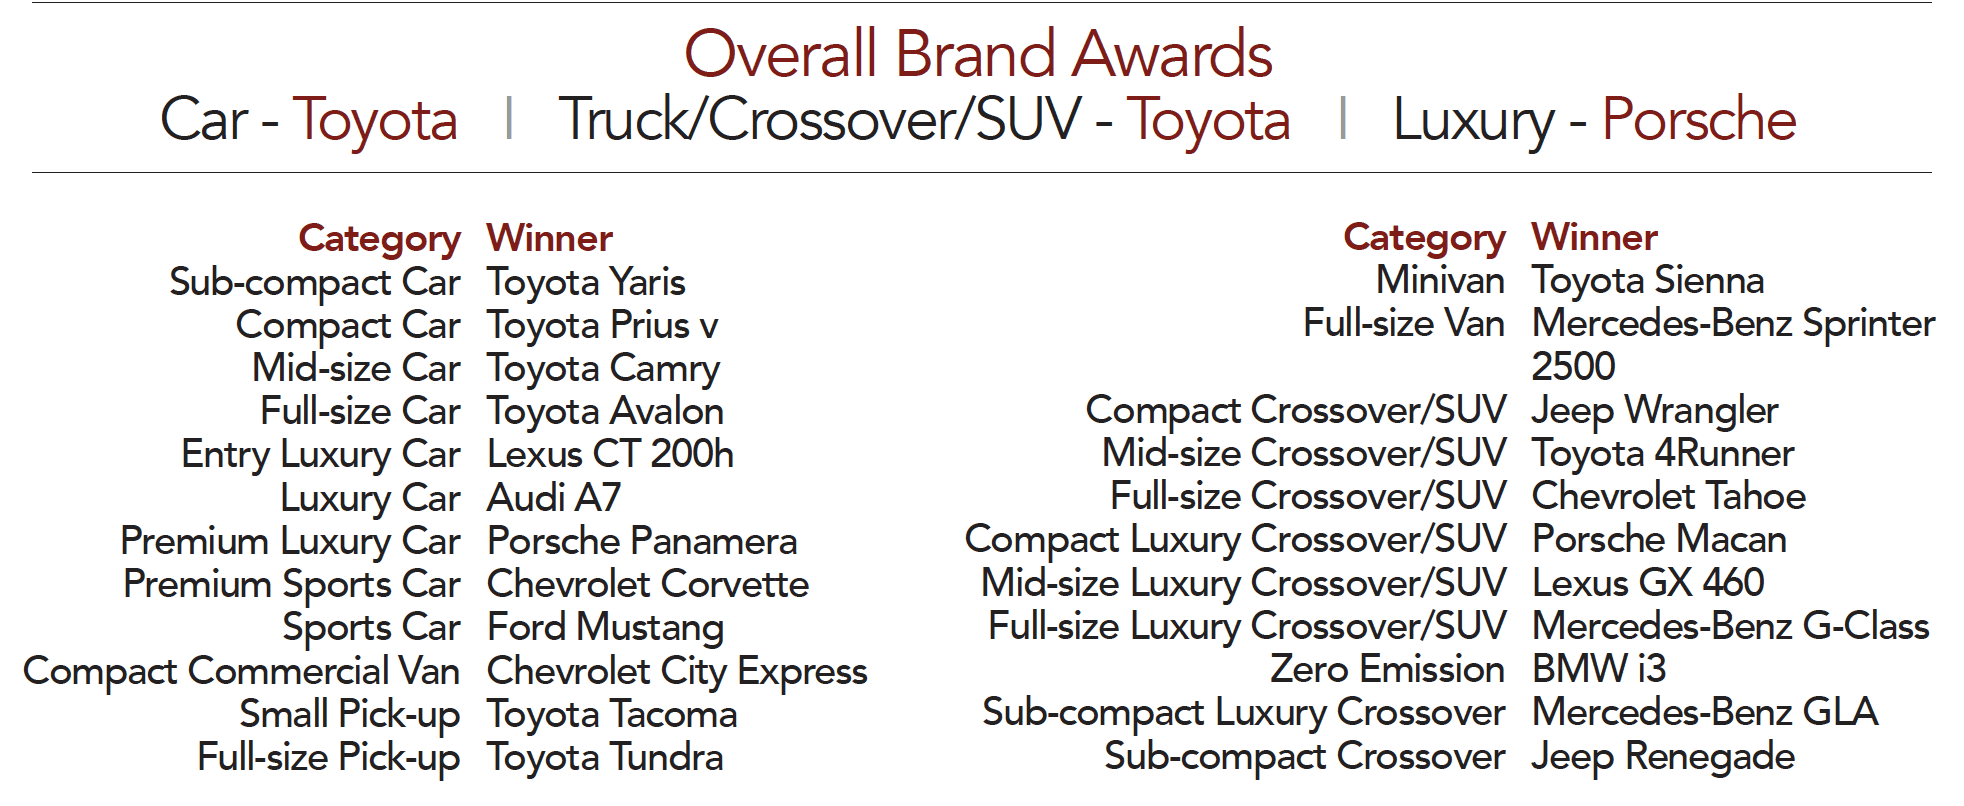 Overall Brand Awards